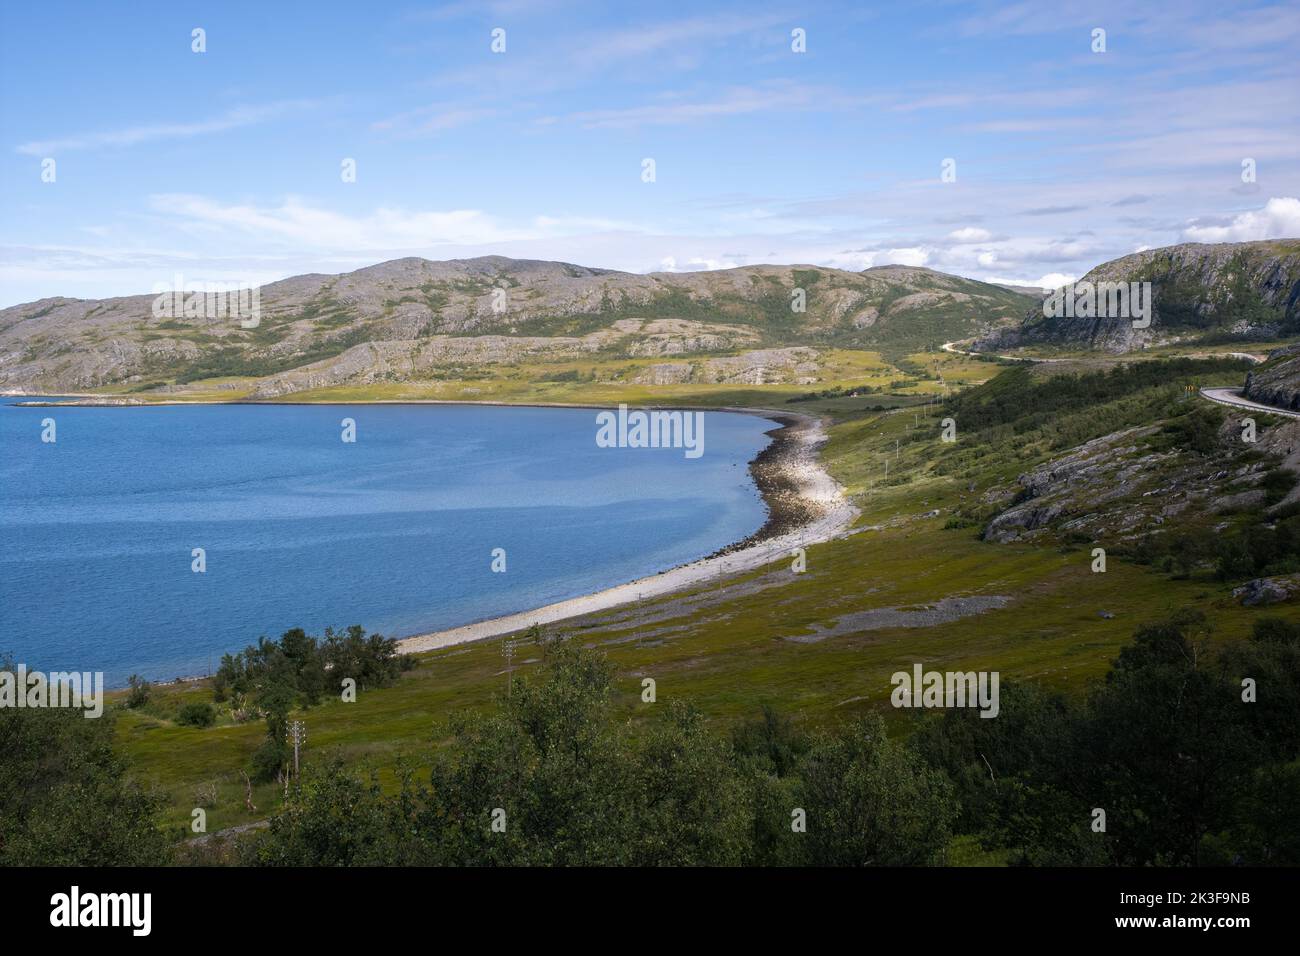 Wunderschöne Landschaften in Norwegen. Nord-Norge. Wunderschöne Landschaft der Küste von Lebesby in den Troms Og Finnmark. Sonniger Tag. Selektiver Fokus Stockfoto